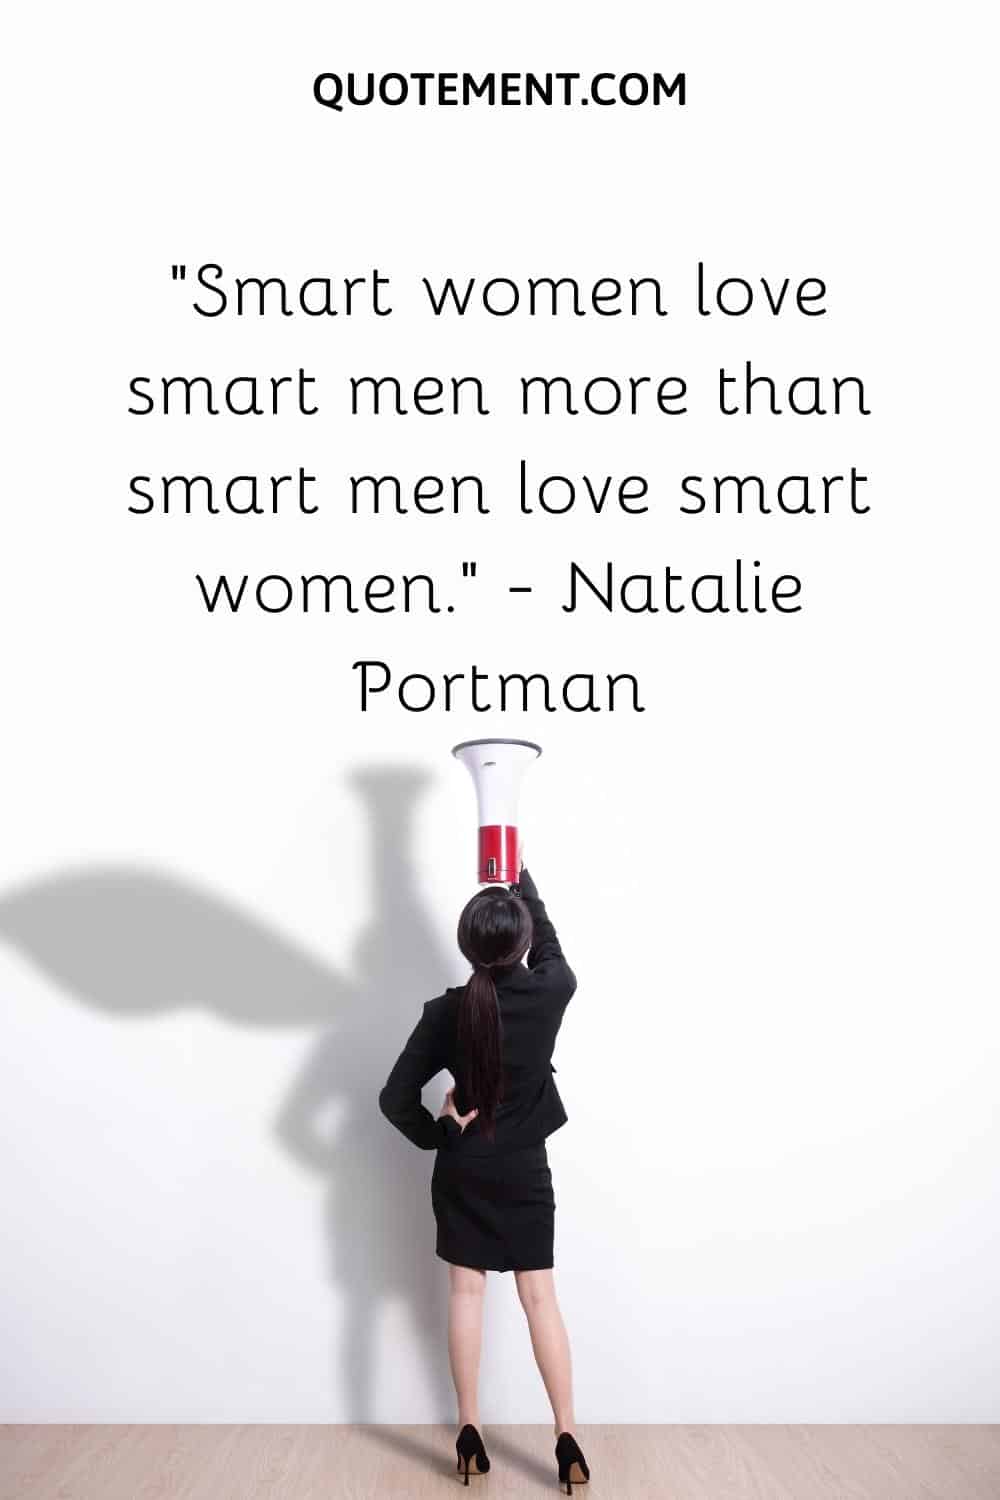 Smart women love smart men more than smart men love smart women